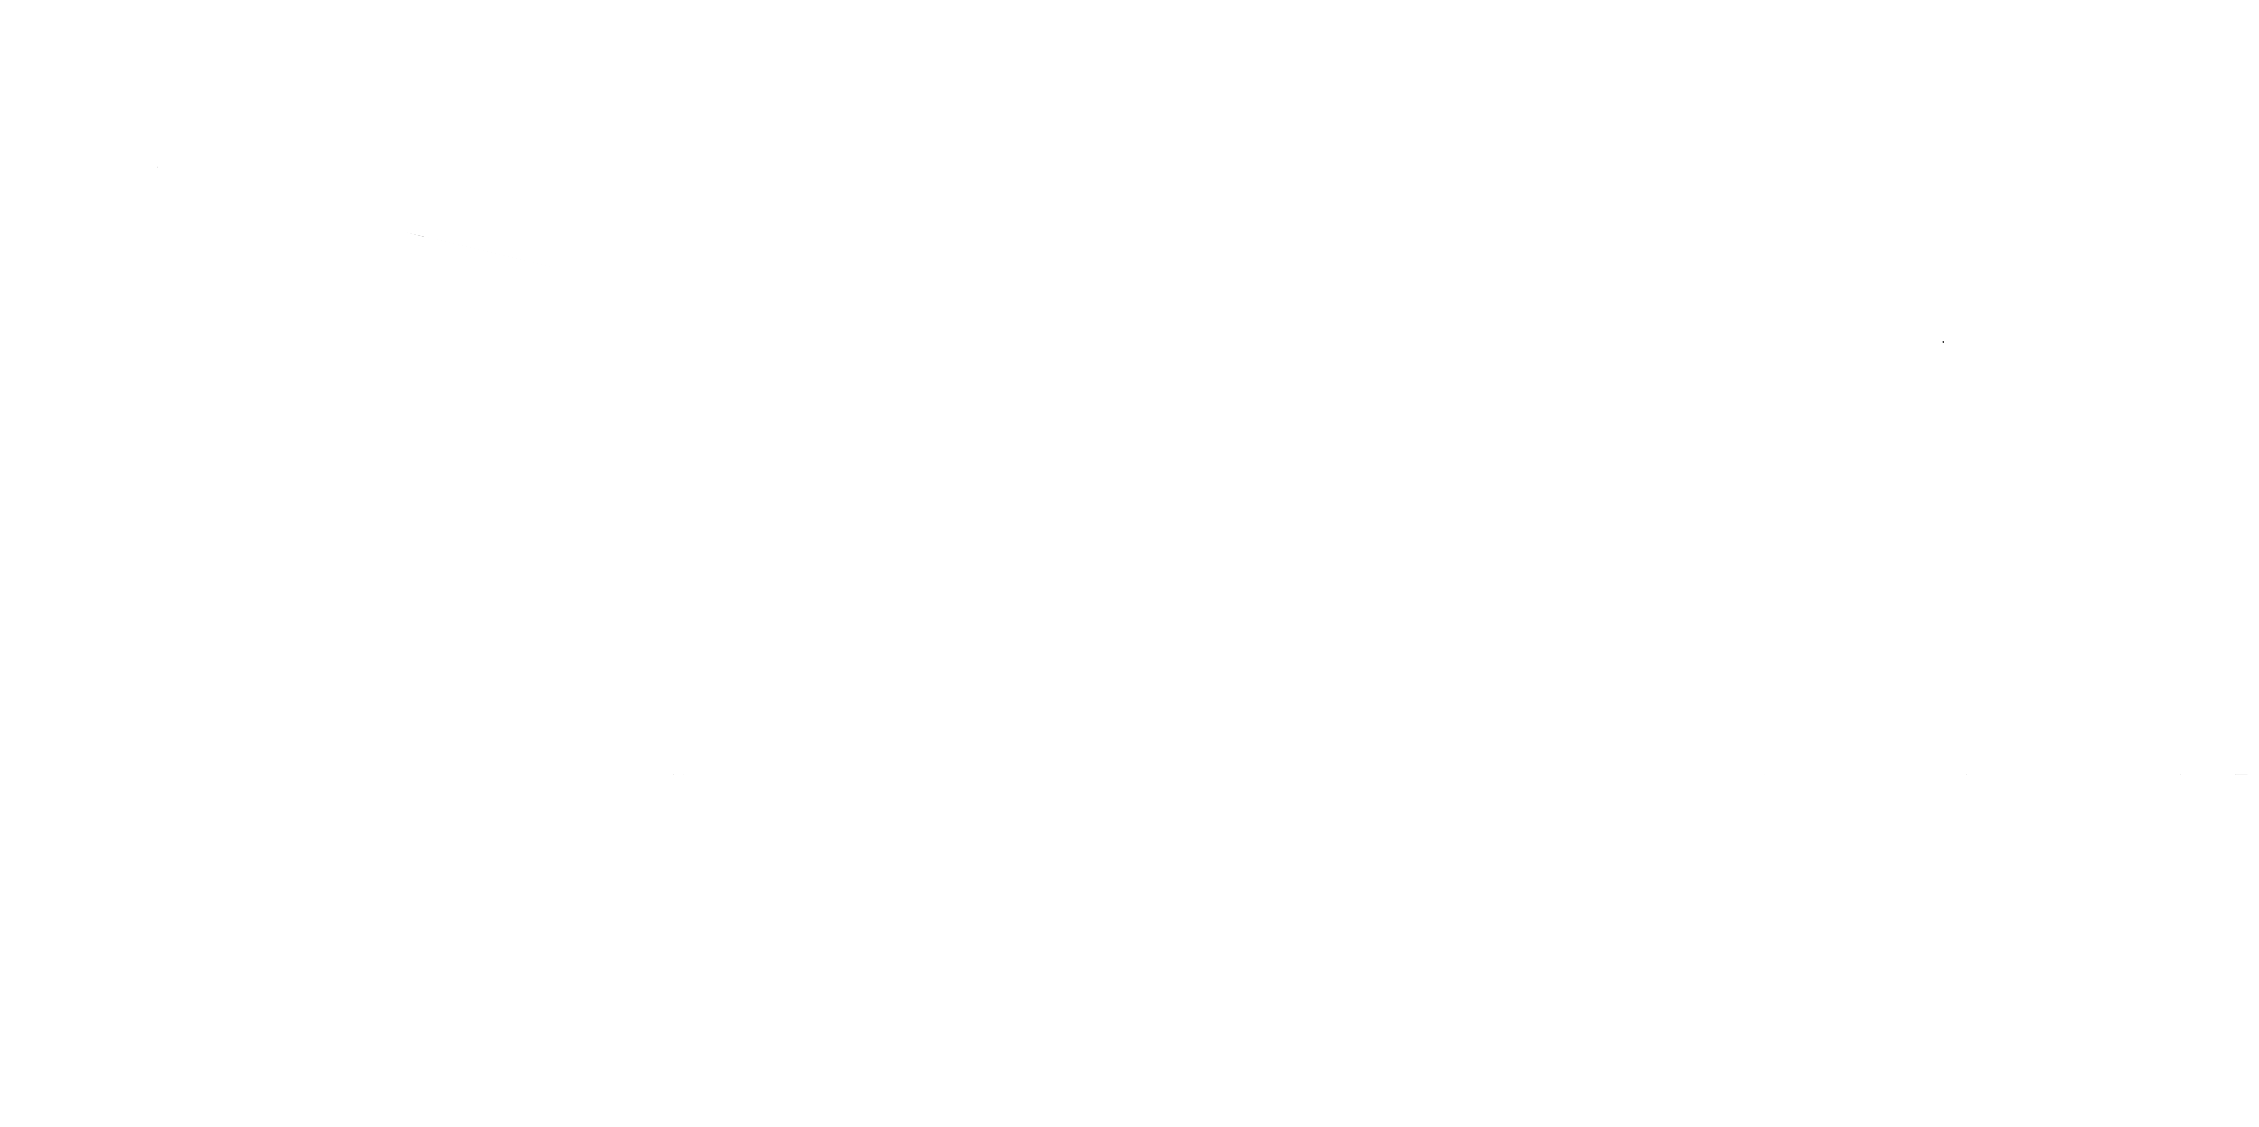 Hospital II-2 Tarapoto